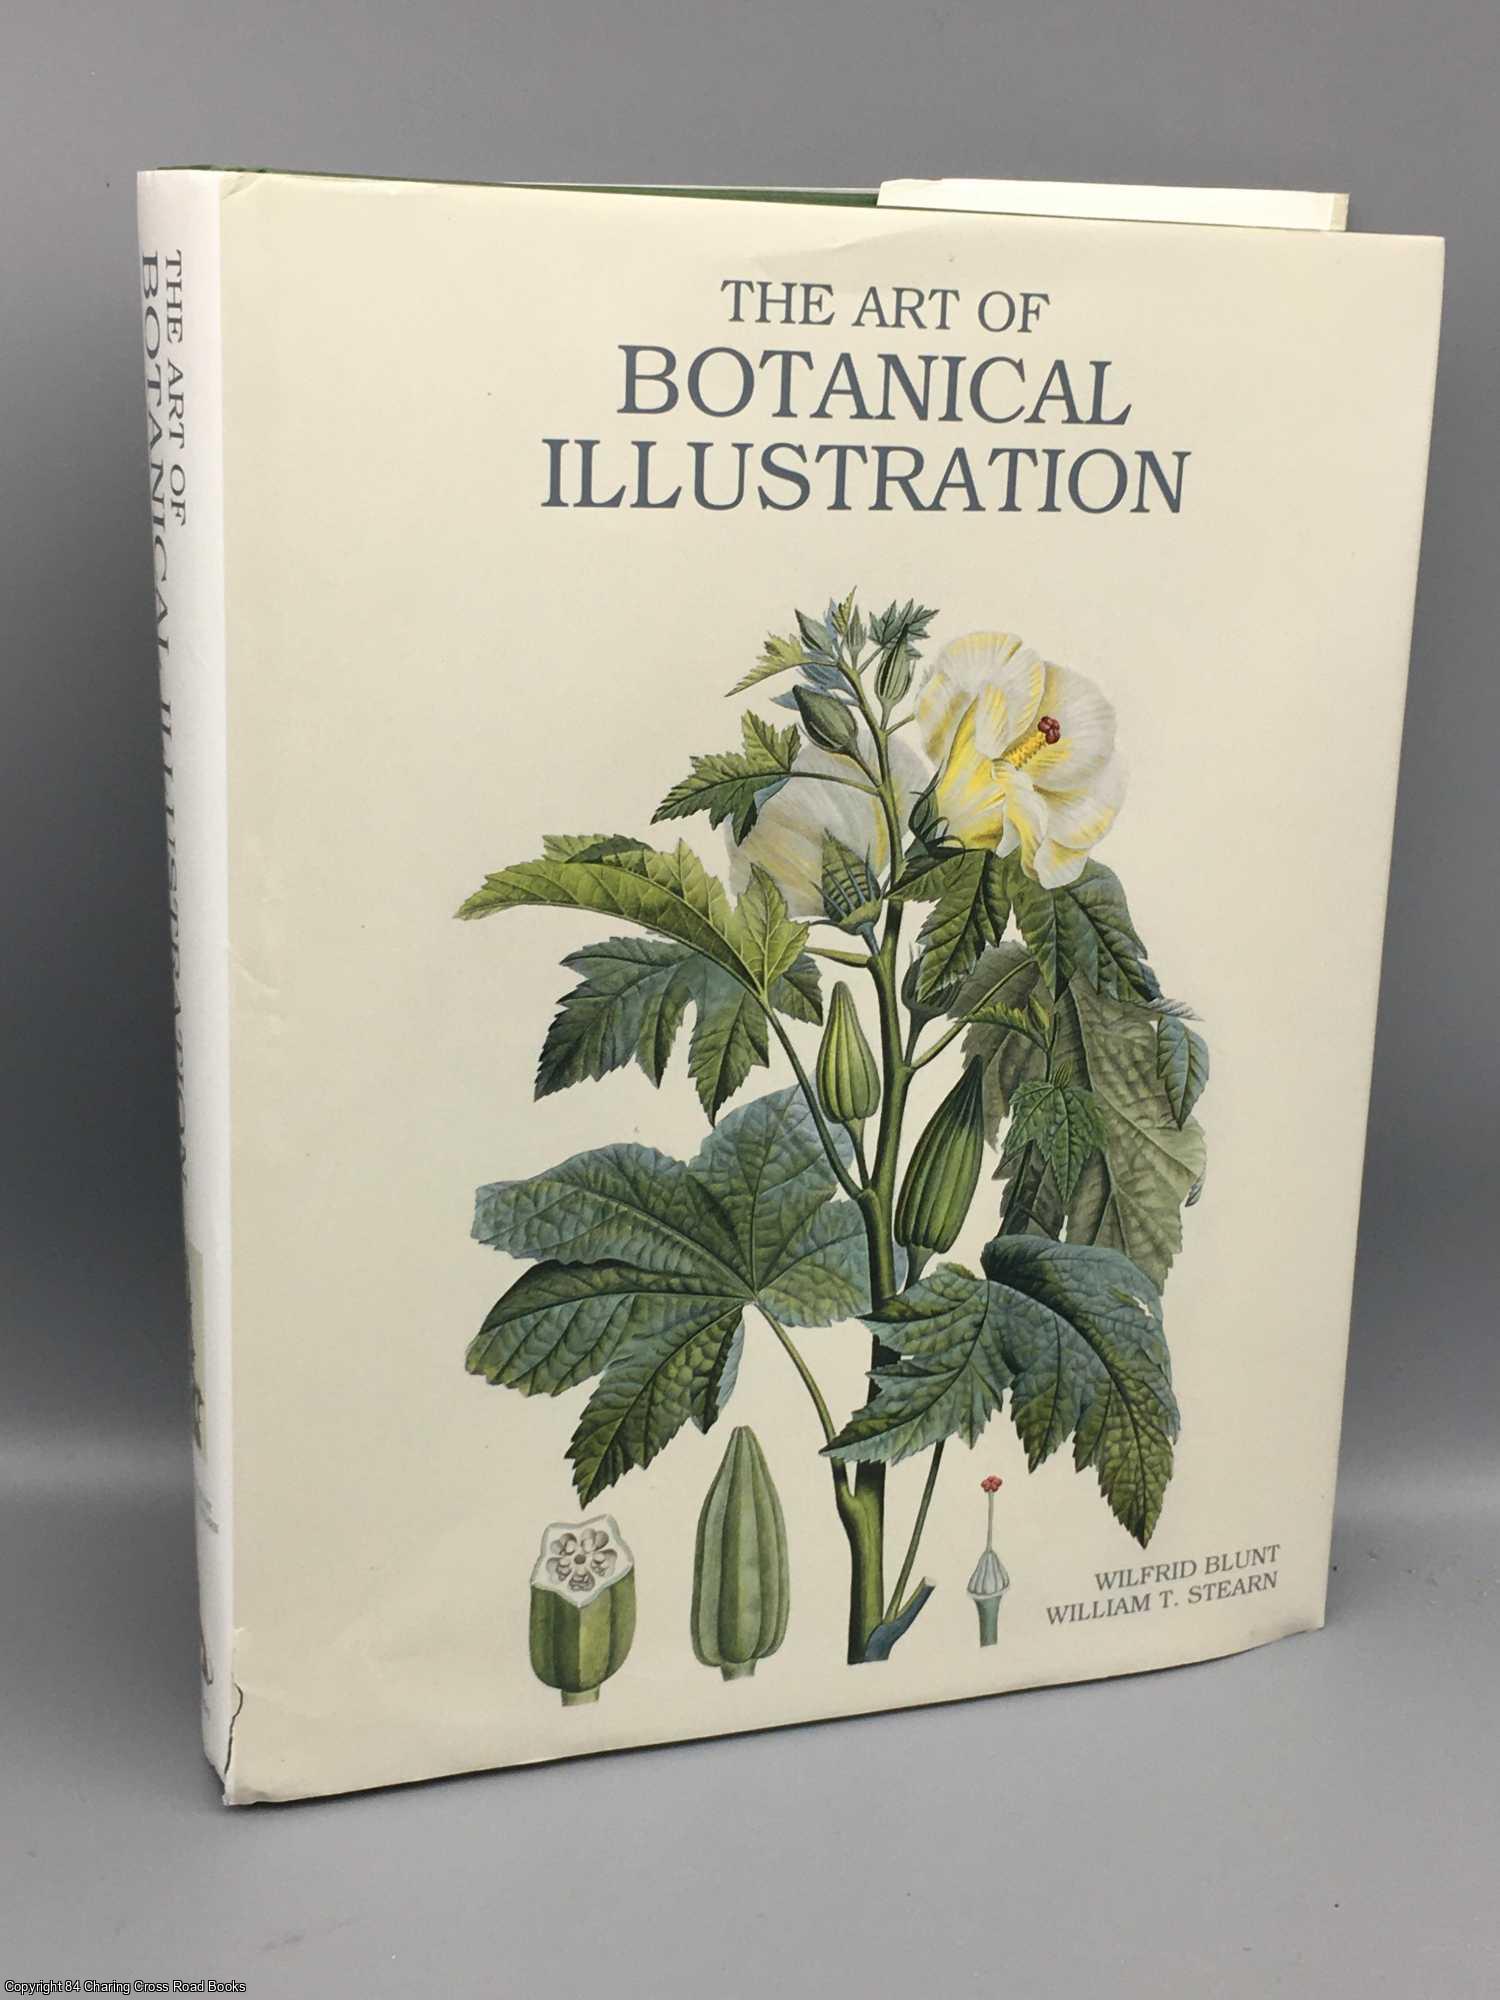 Blunt, Wilfrid, Stern, William T. - The Art of Botanical Illustration